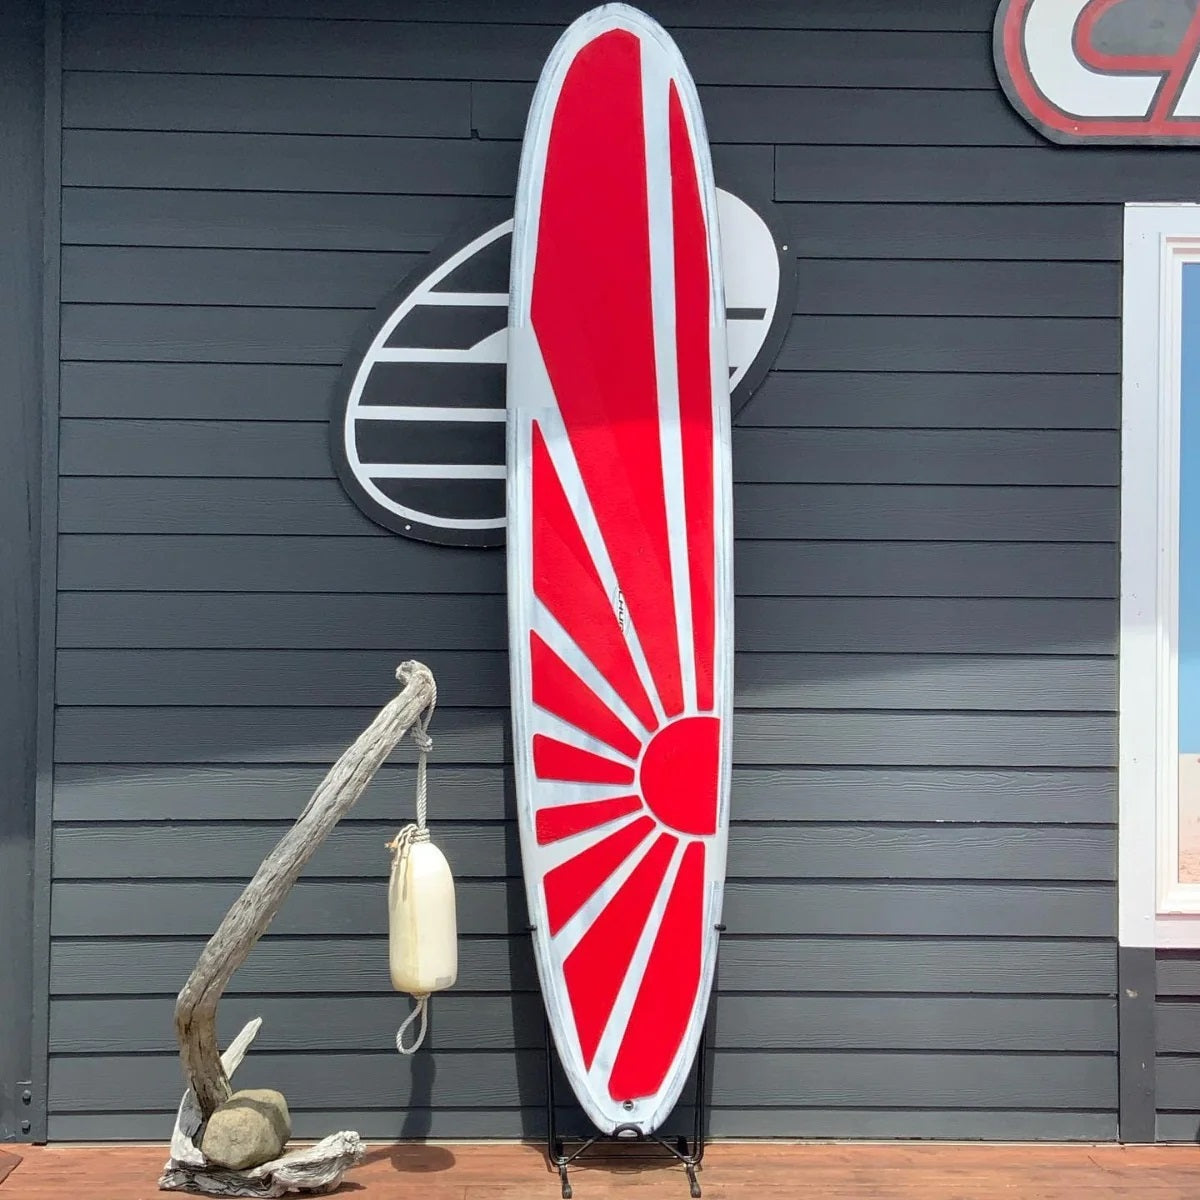 Used Longboard for beginner surfer